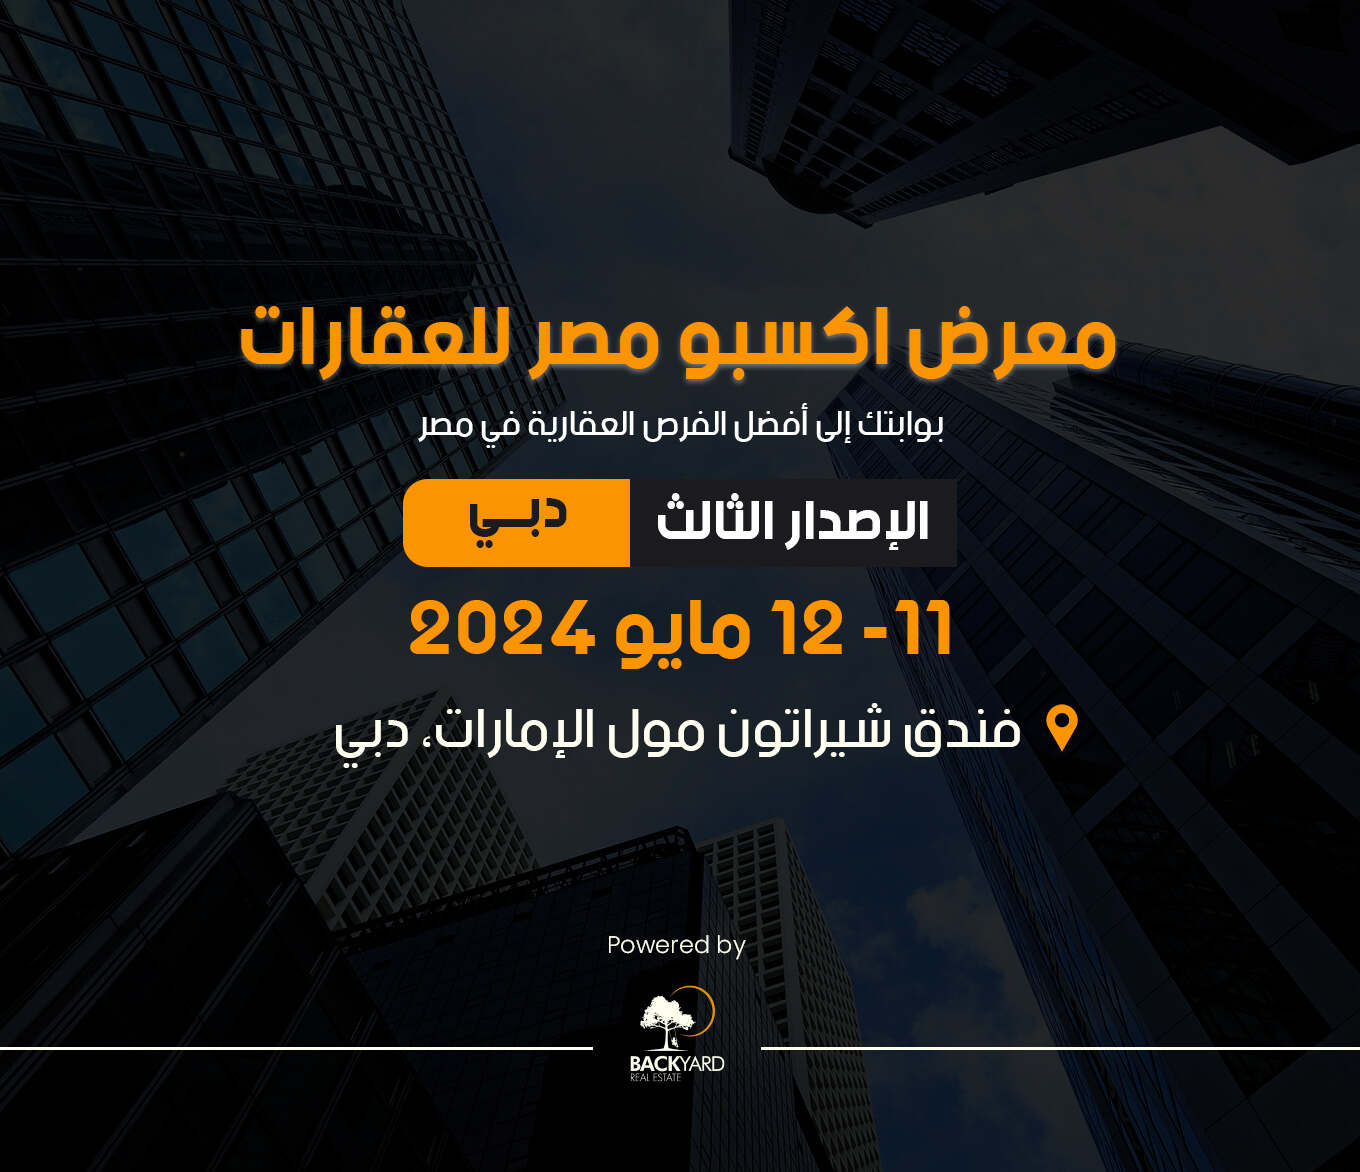 Egypt property Expo in Dubai - معرض اكسبو مصر للعقارات في دبي